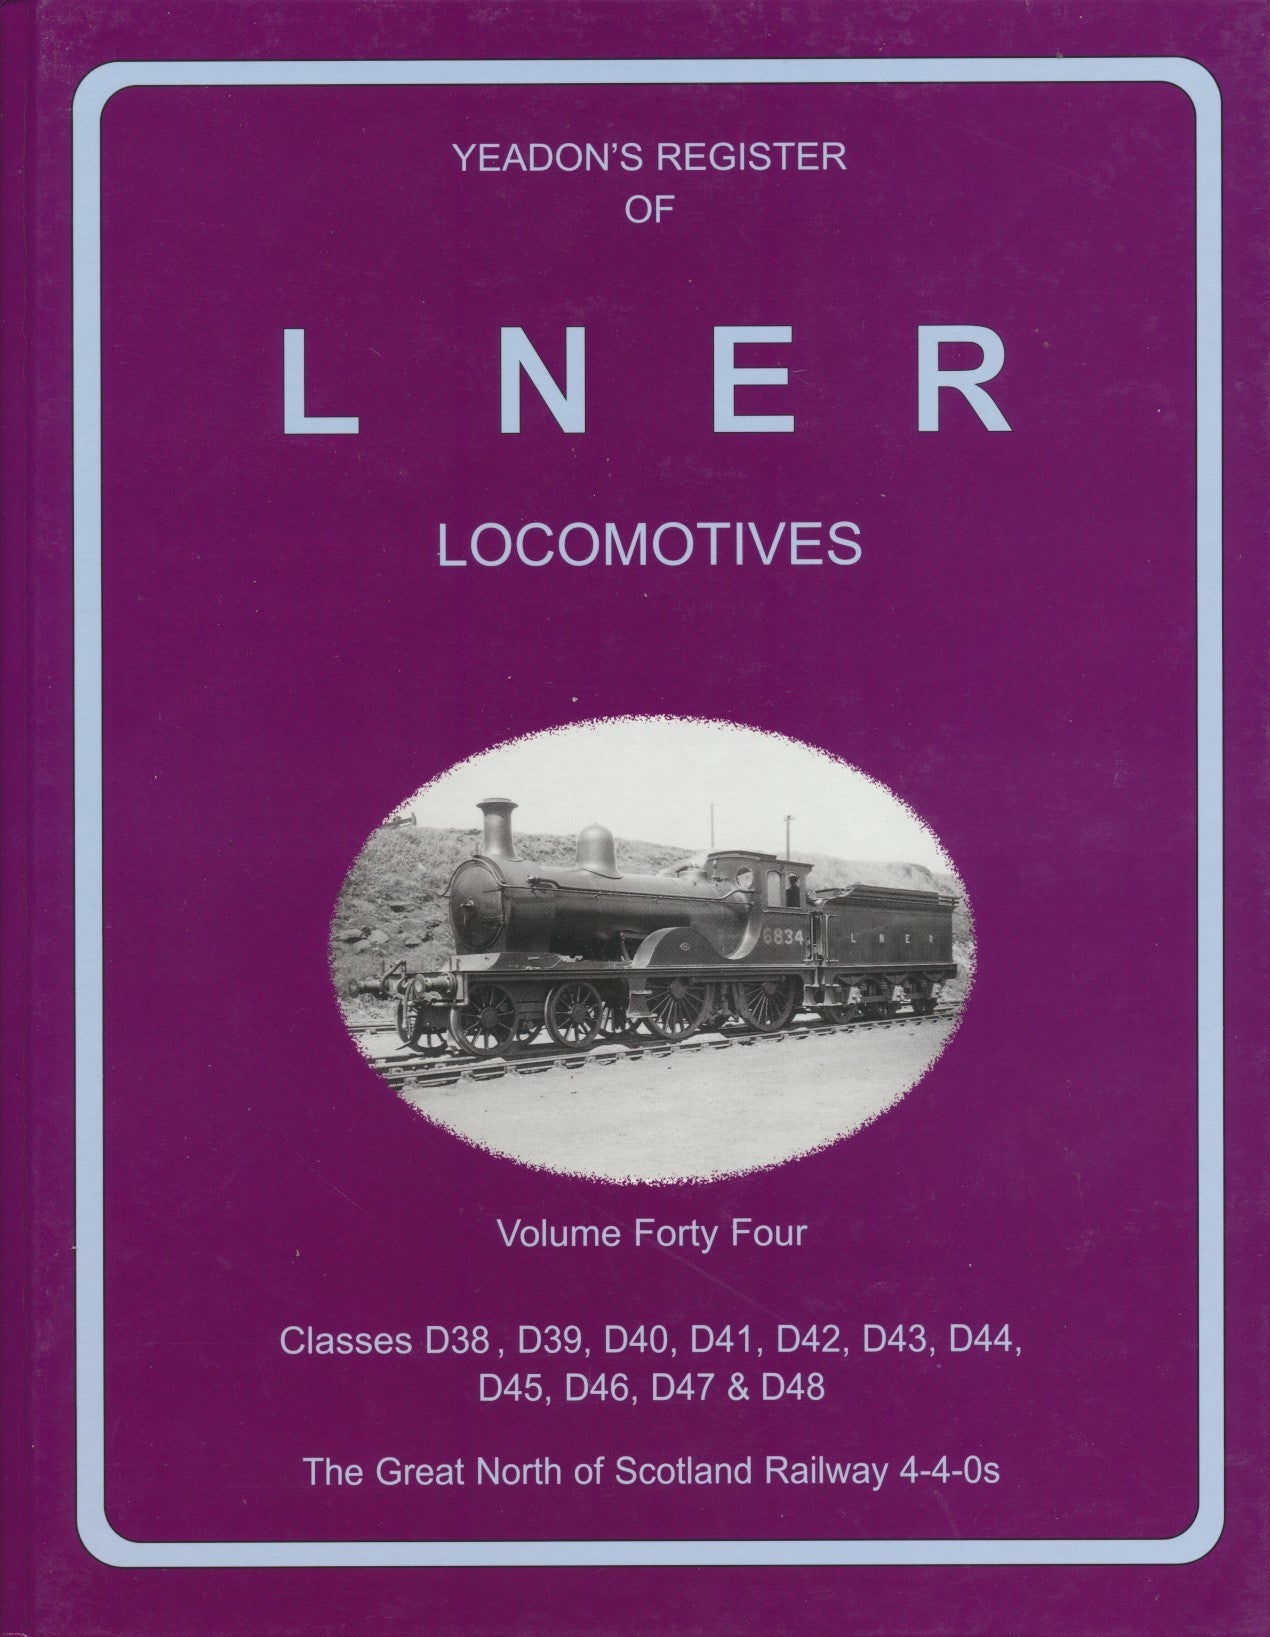 Yeadon's Register of LNER Locomotives, Volume 44 - Classes D38-D48